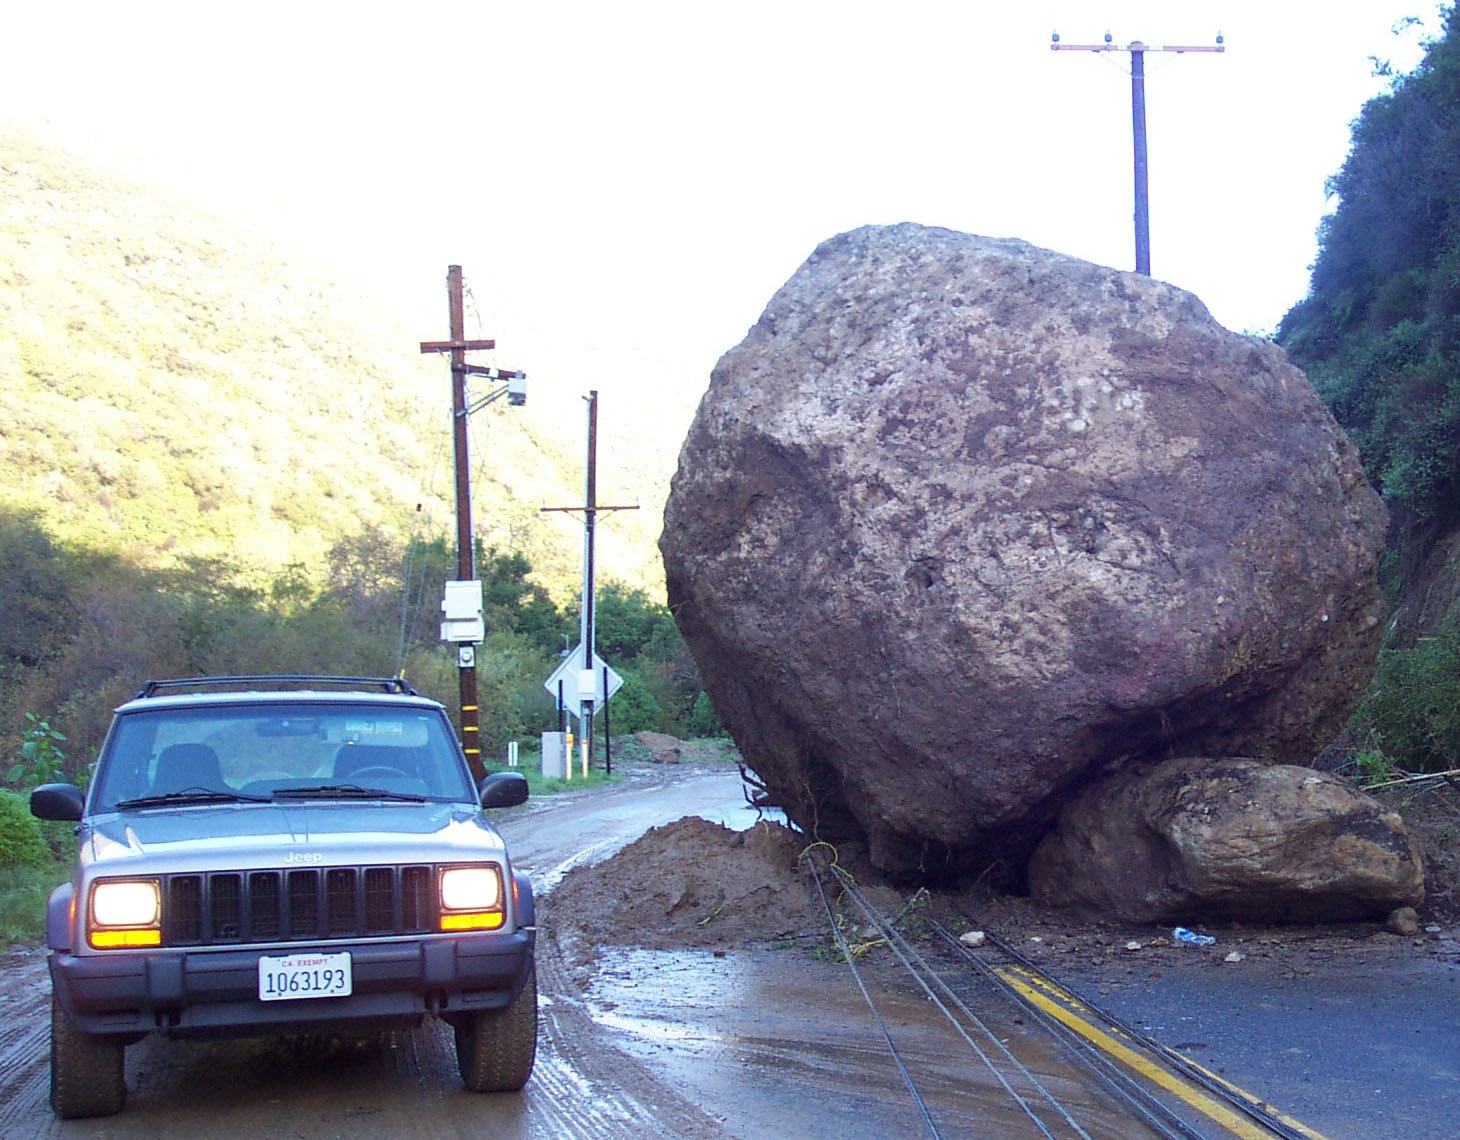 Large rock on roadway dwarfs adjacent vehicle.